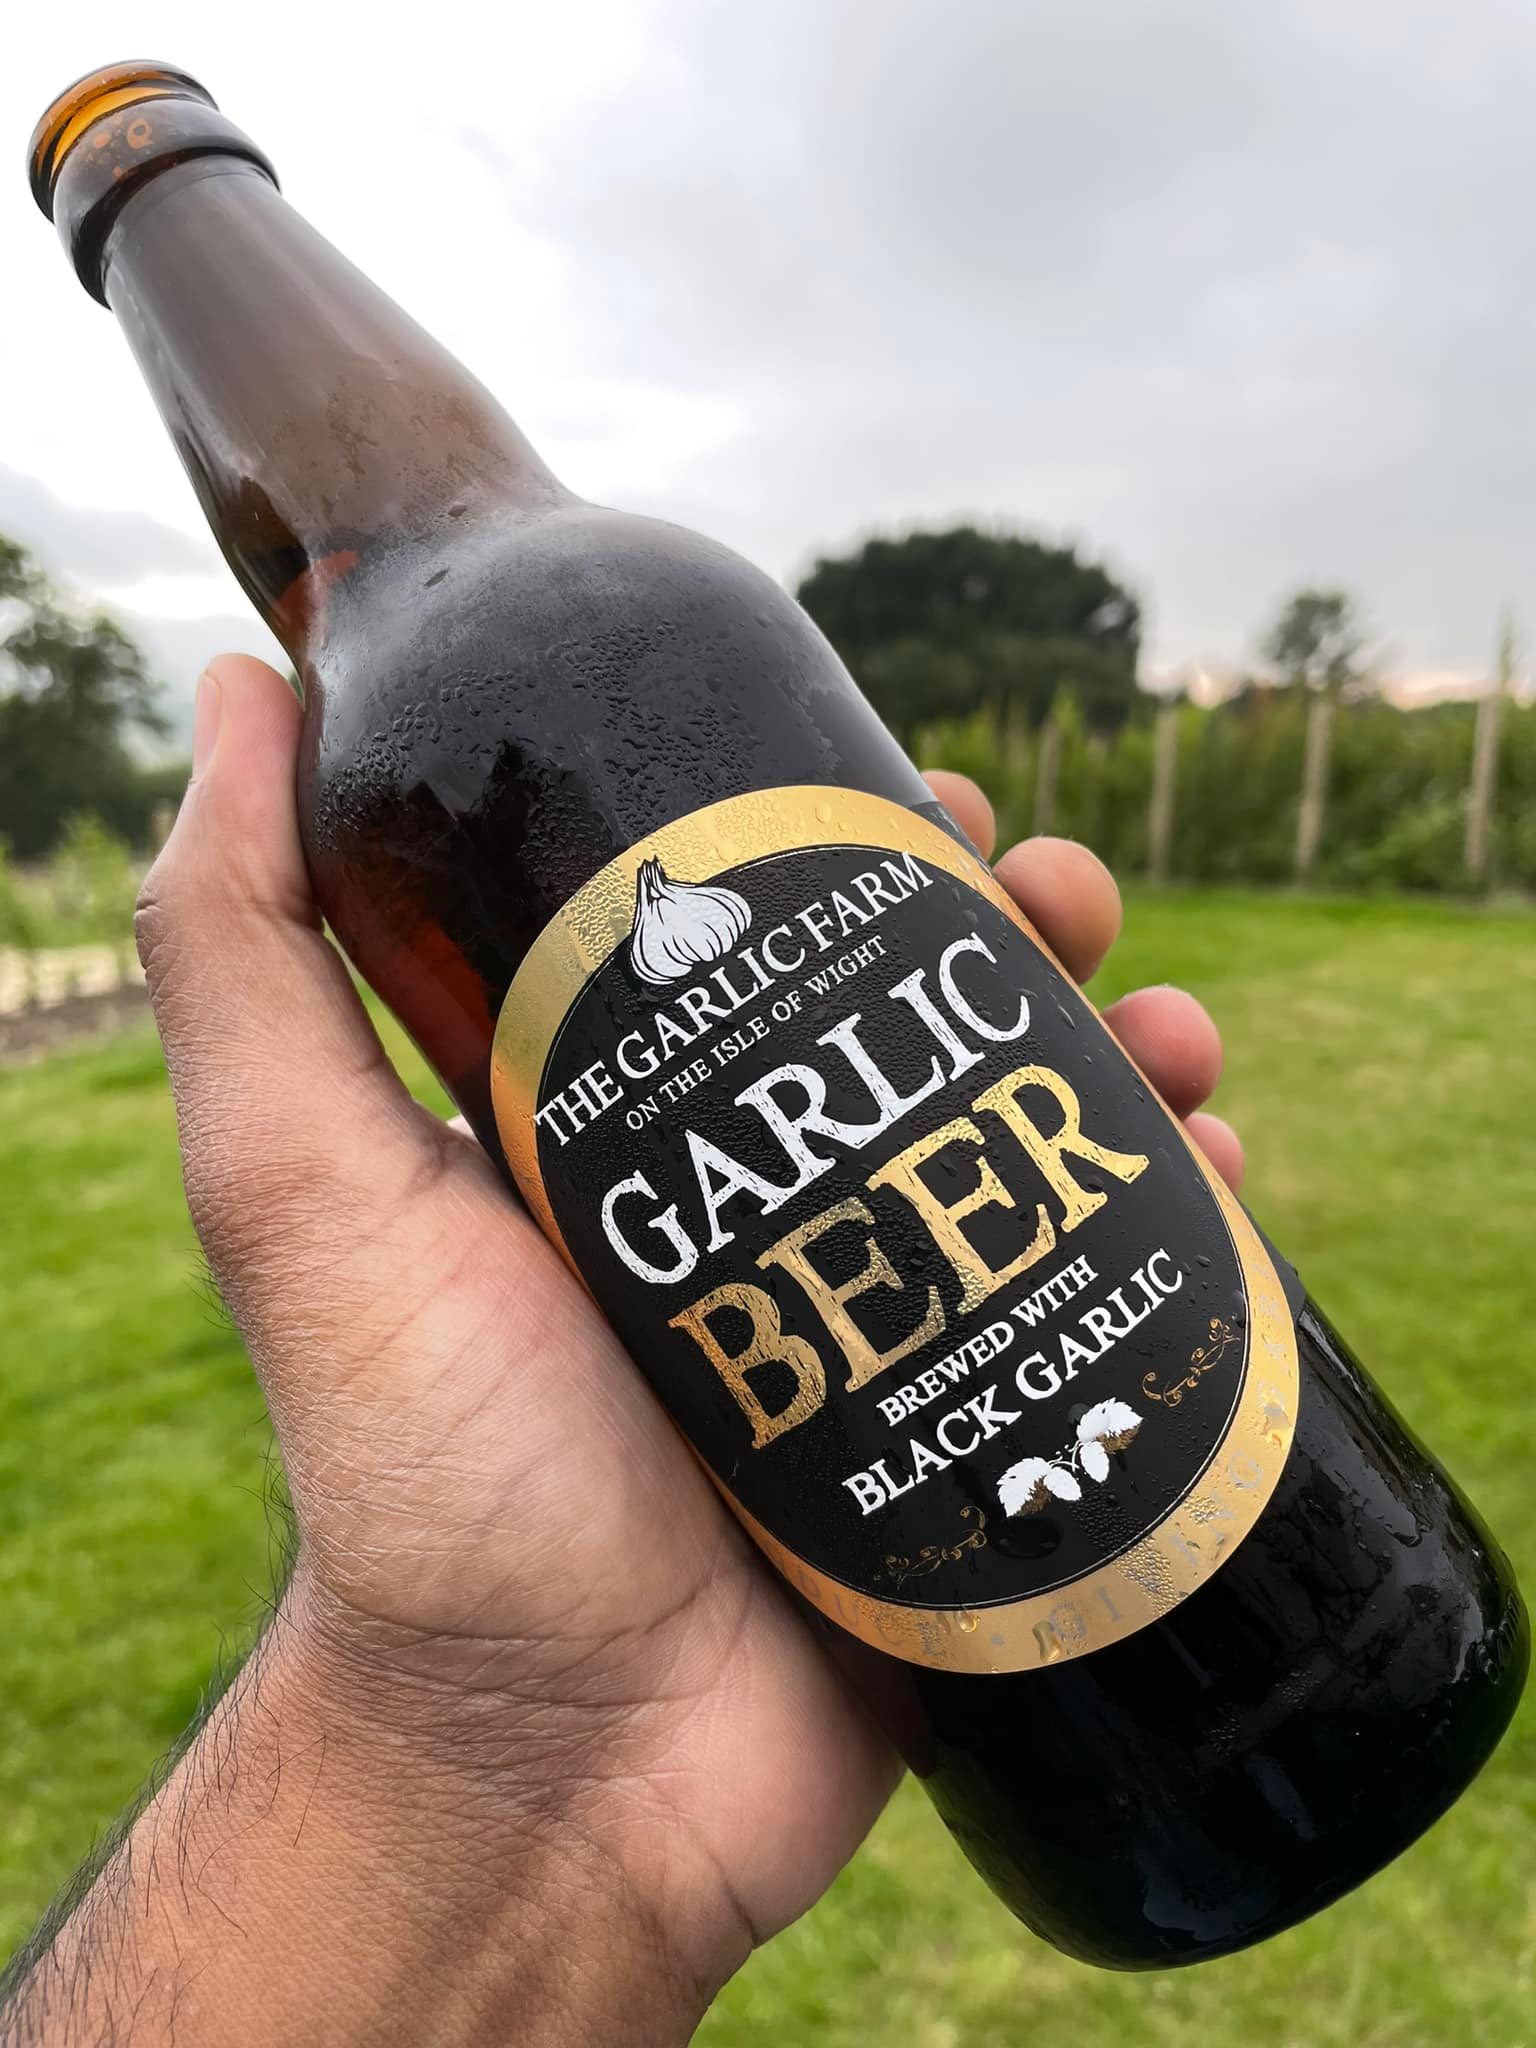 Garlic Beer
